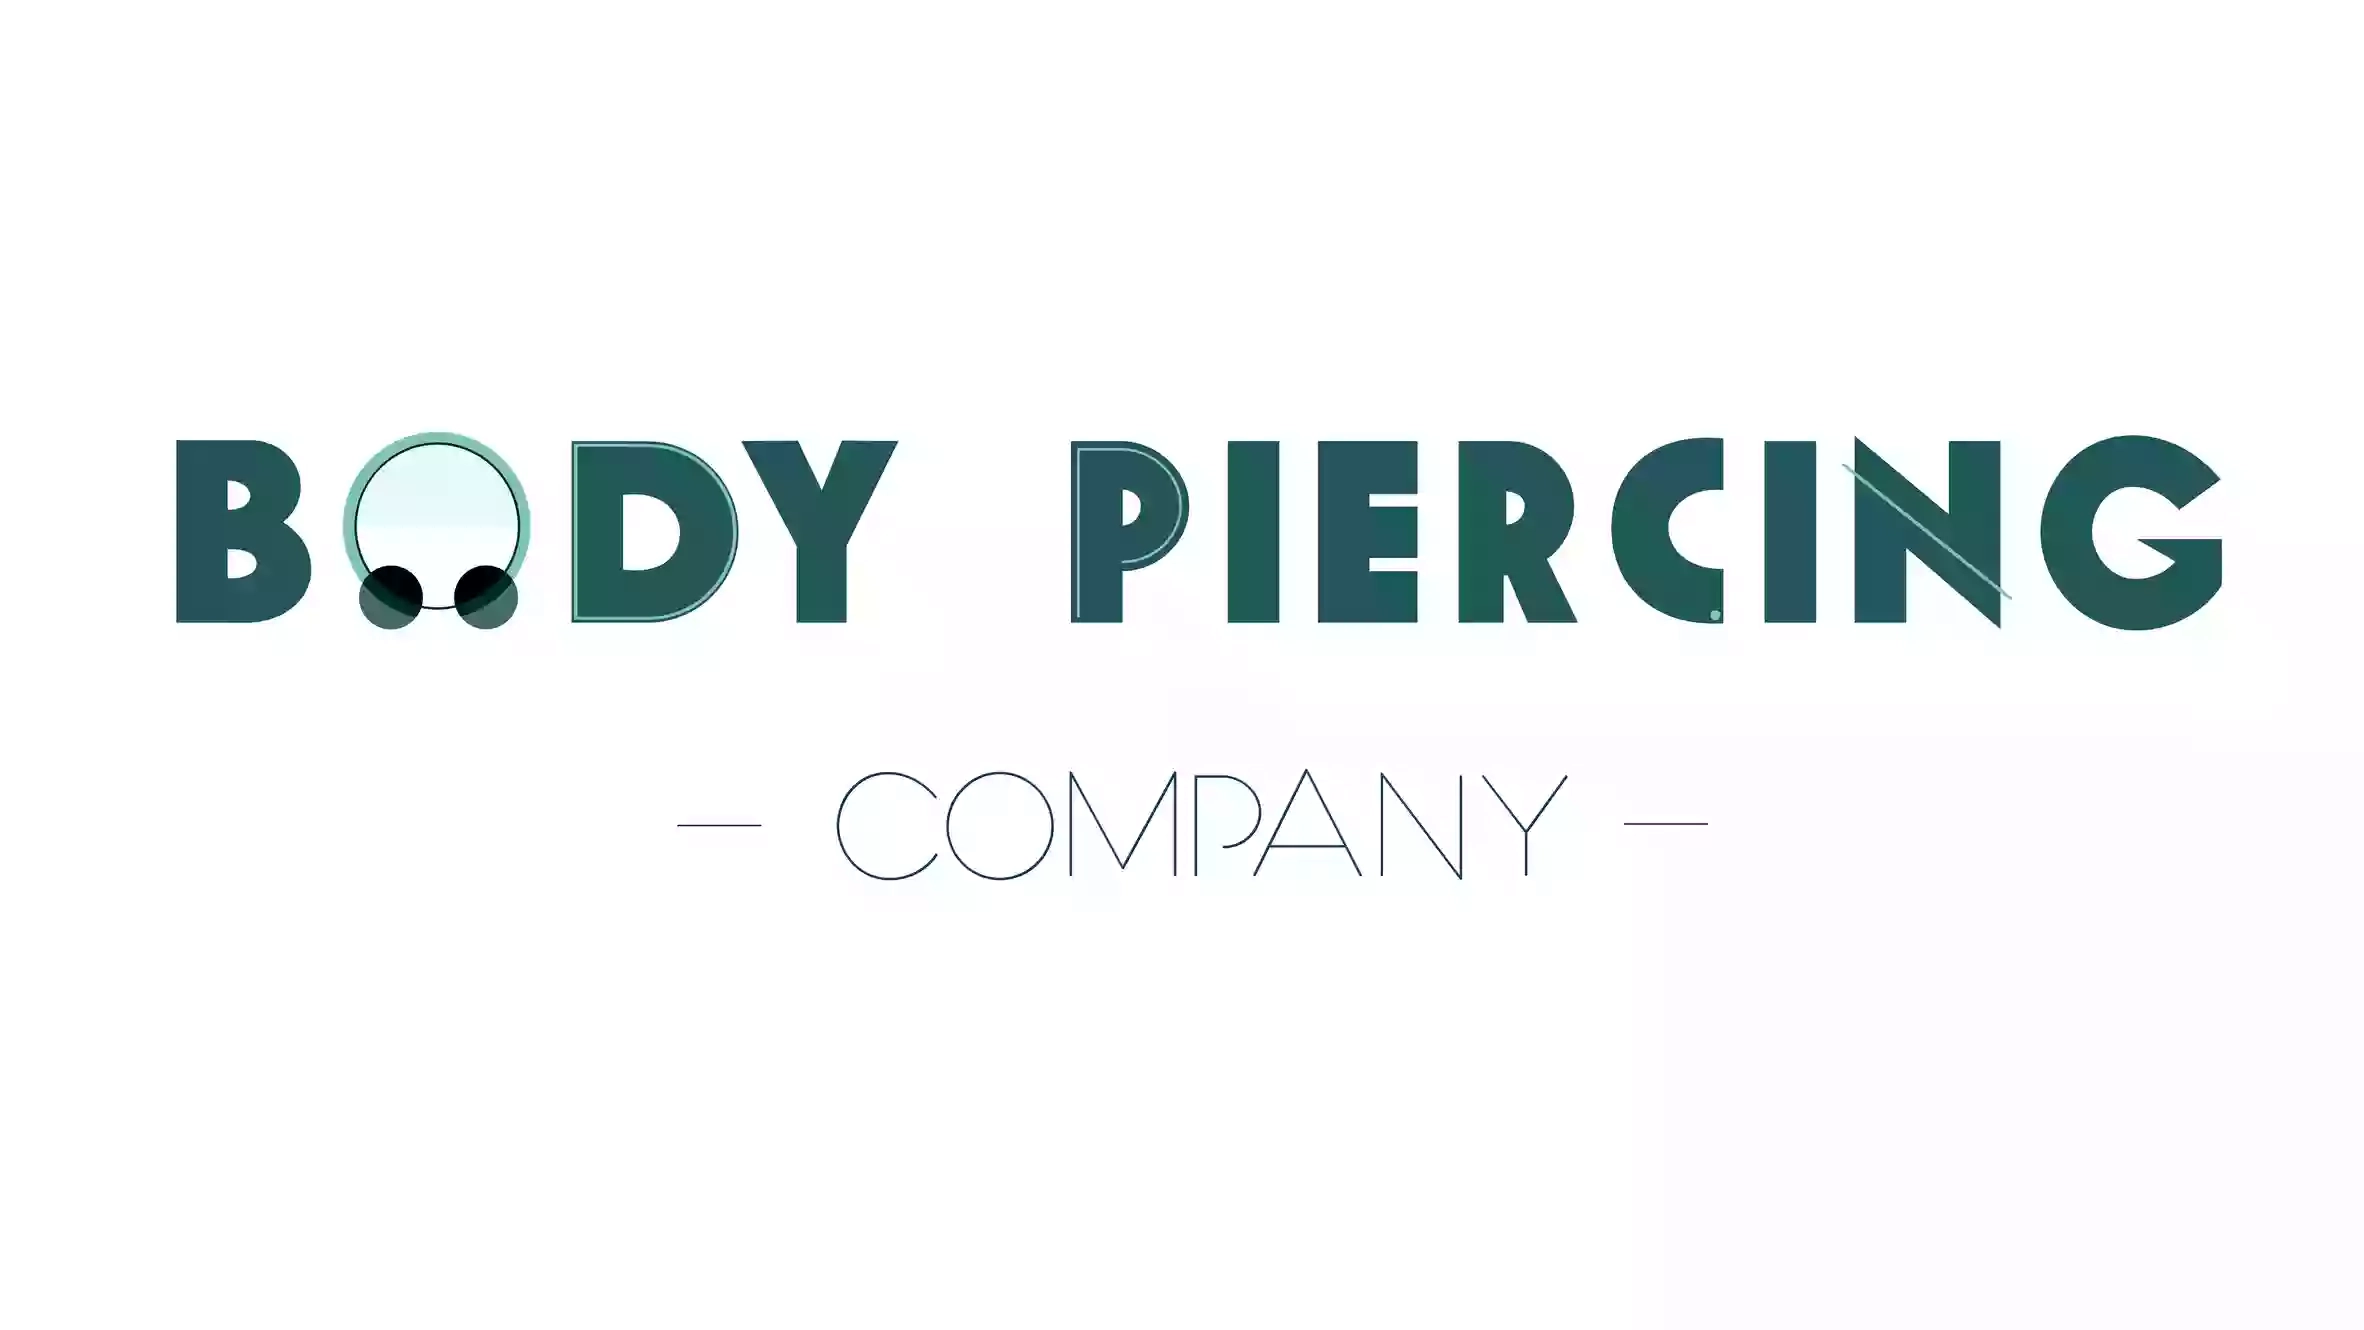 Body Piercing Company